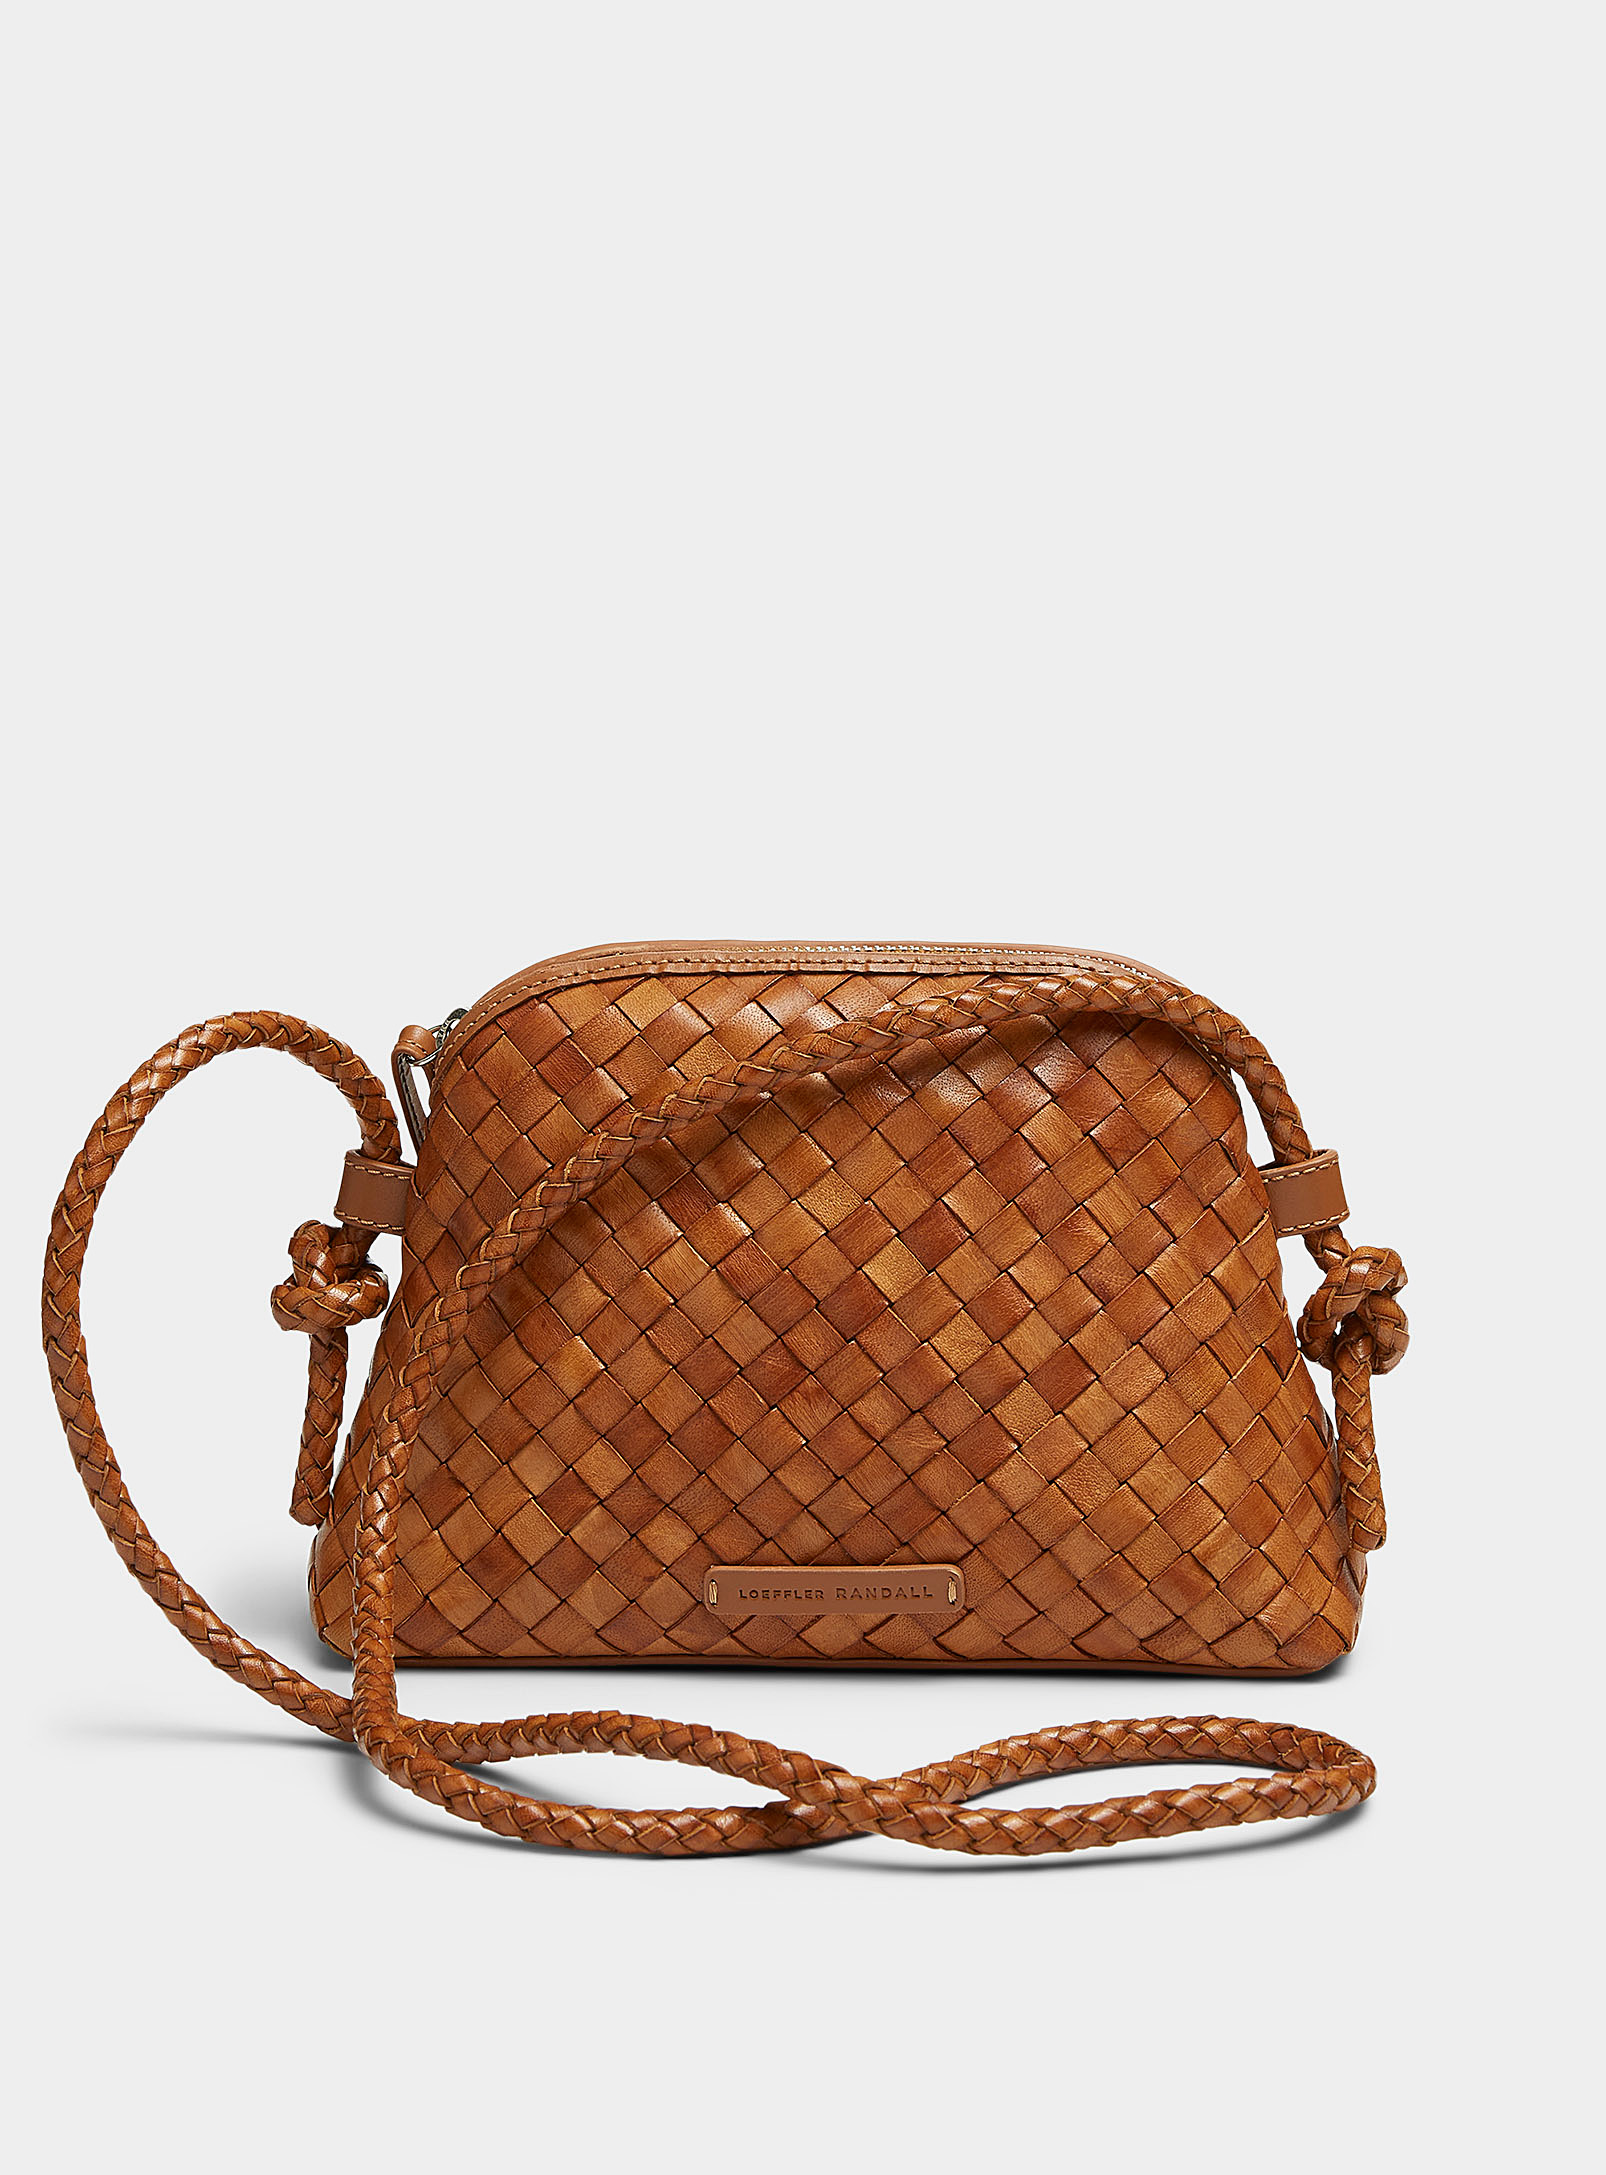 Loeffler Randall - Women's Marybeth braided leather mini bag